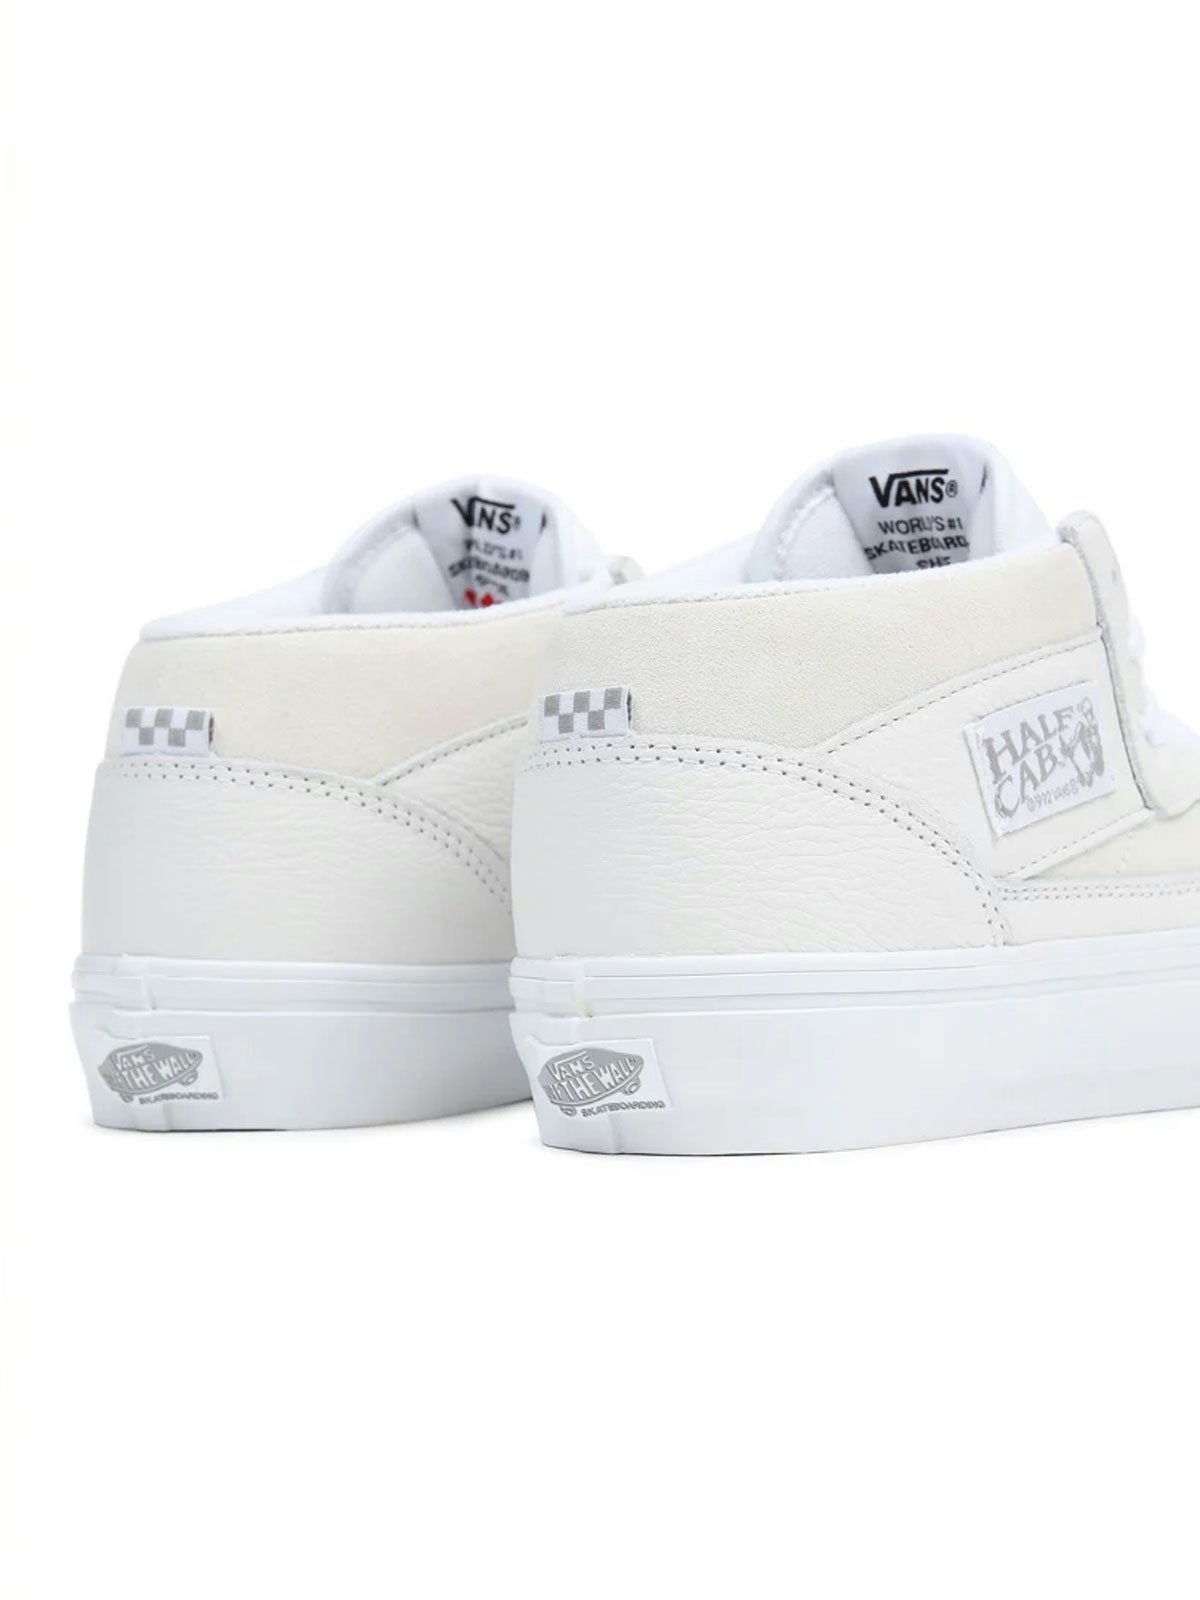 Vans Daz Skate Half Cab Shoes White/White 5